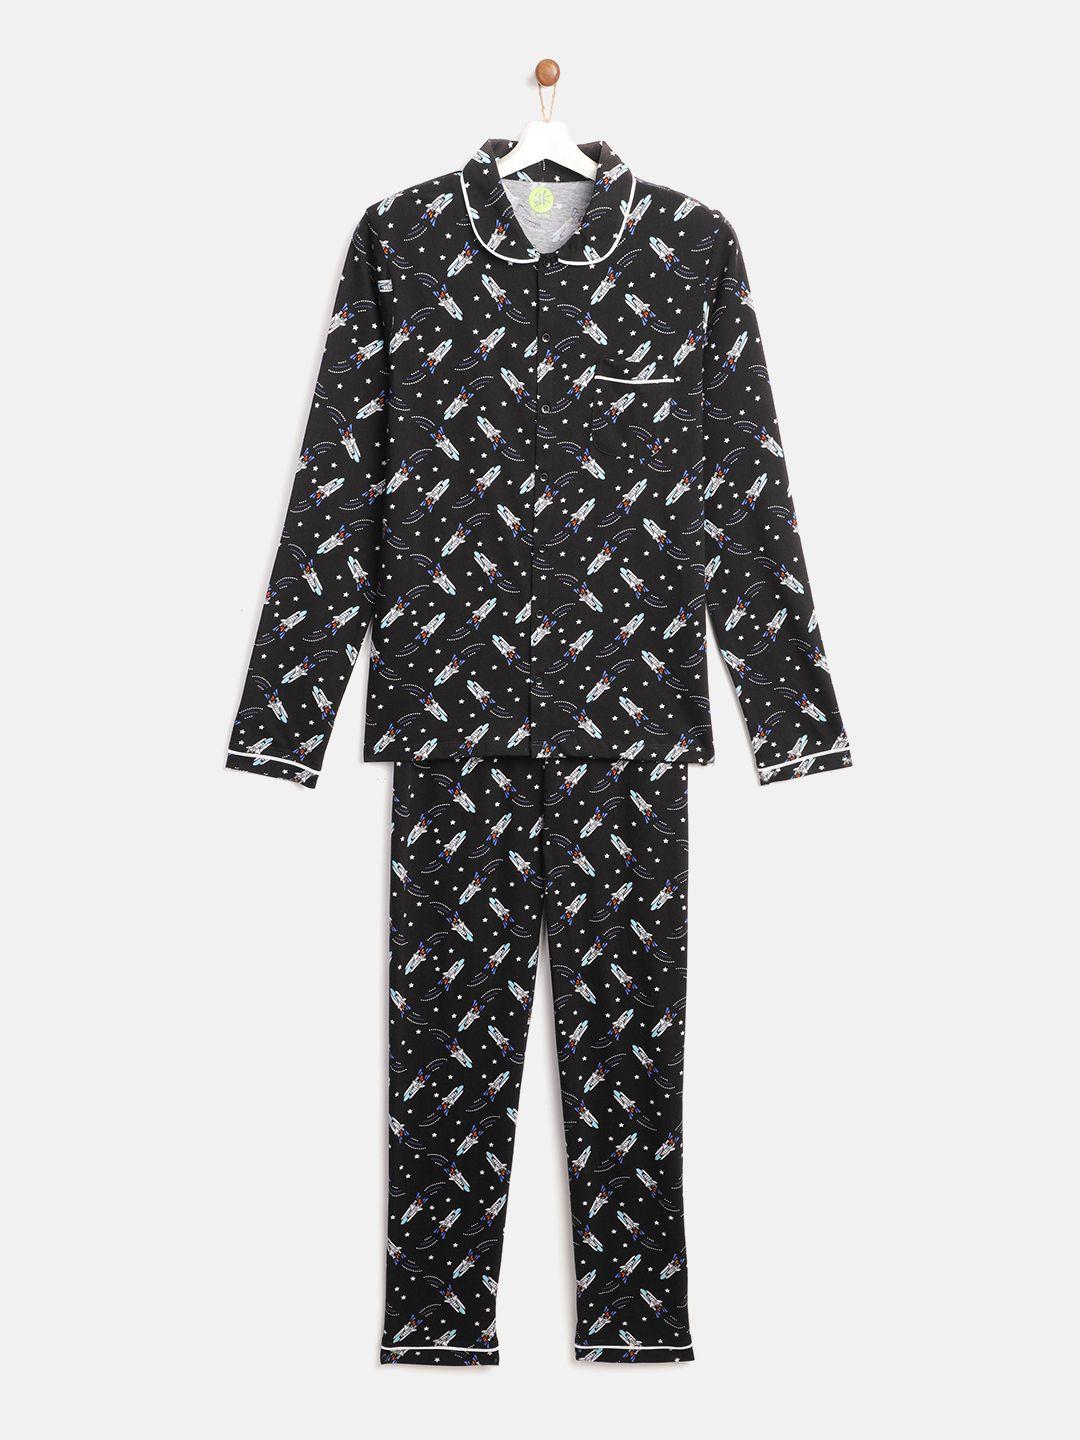 yk boys black & white rocket print pure cotton night suit